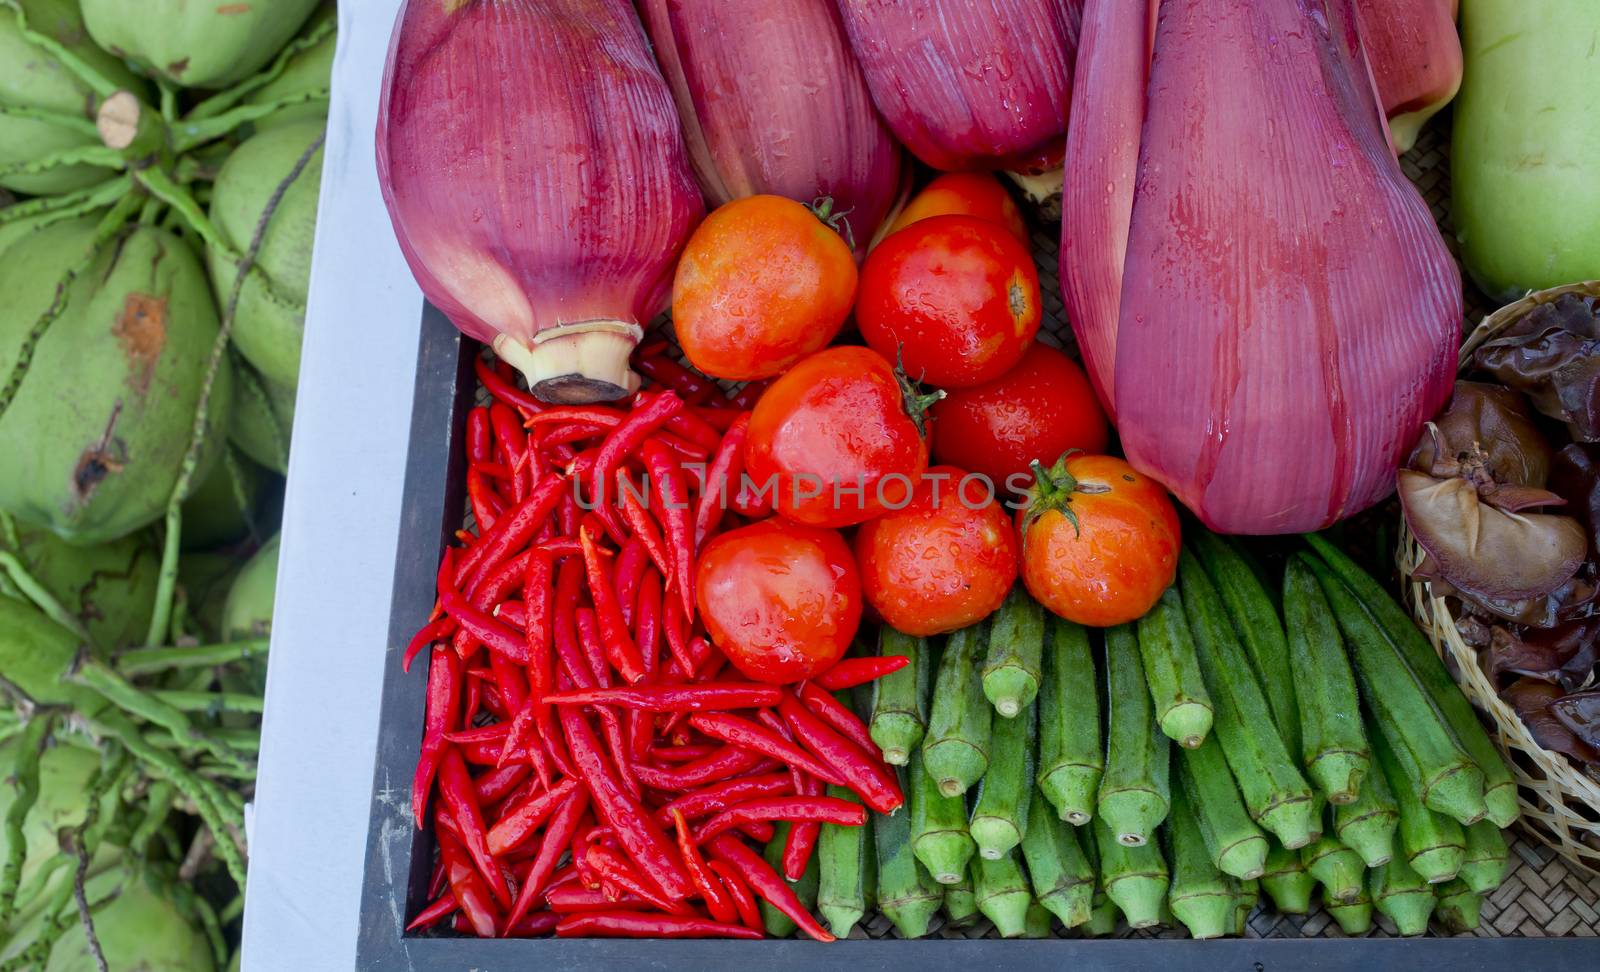 Kind of Thai vegetables set in Thai kitchen style, Tomatoes, Chilli, Banana Blossom, Green roselle.